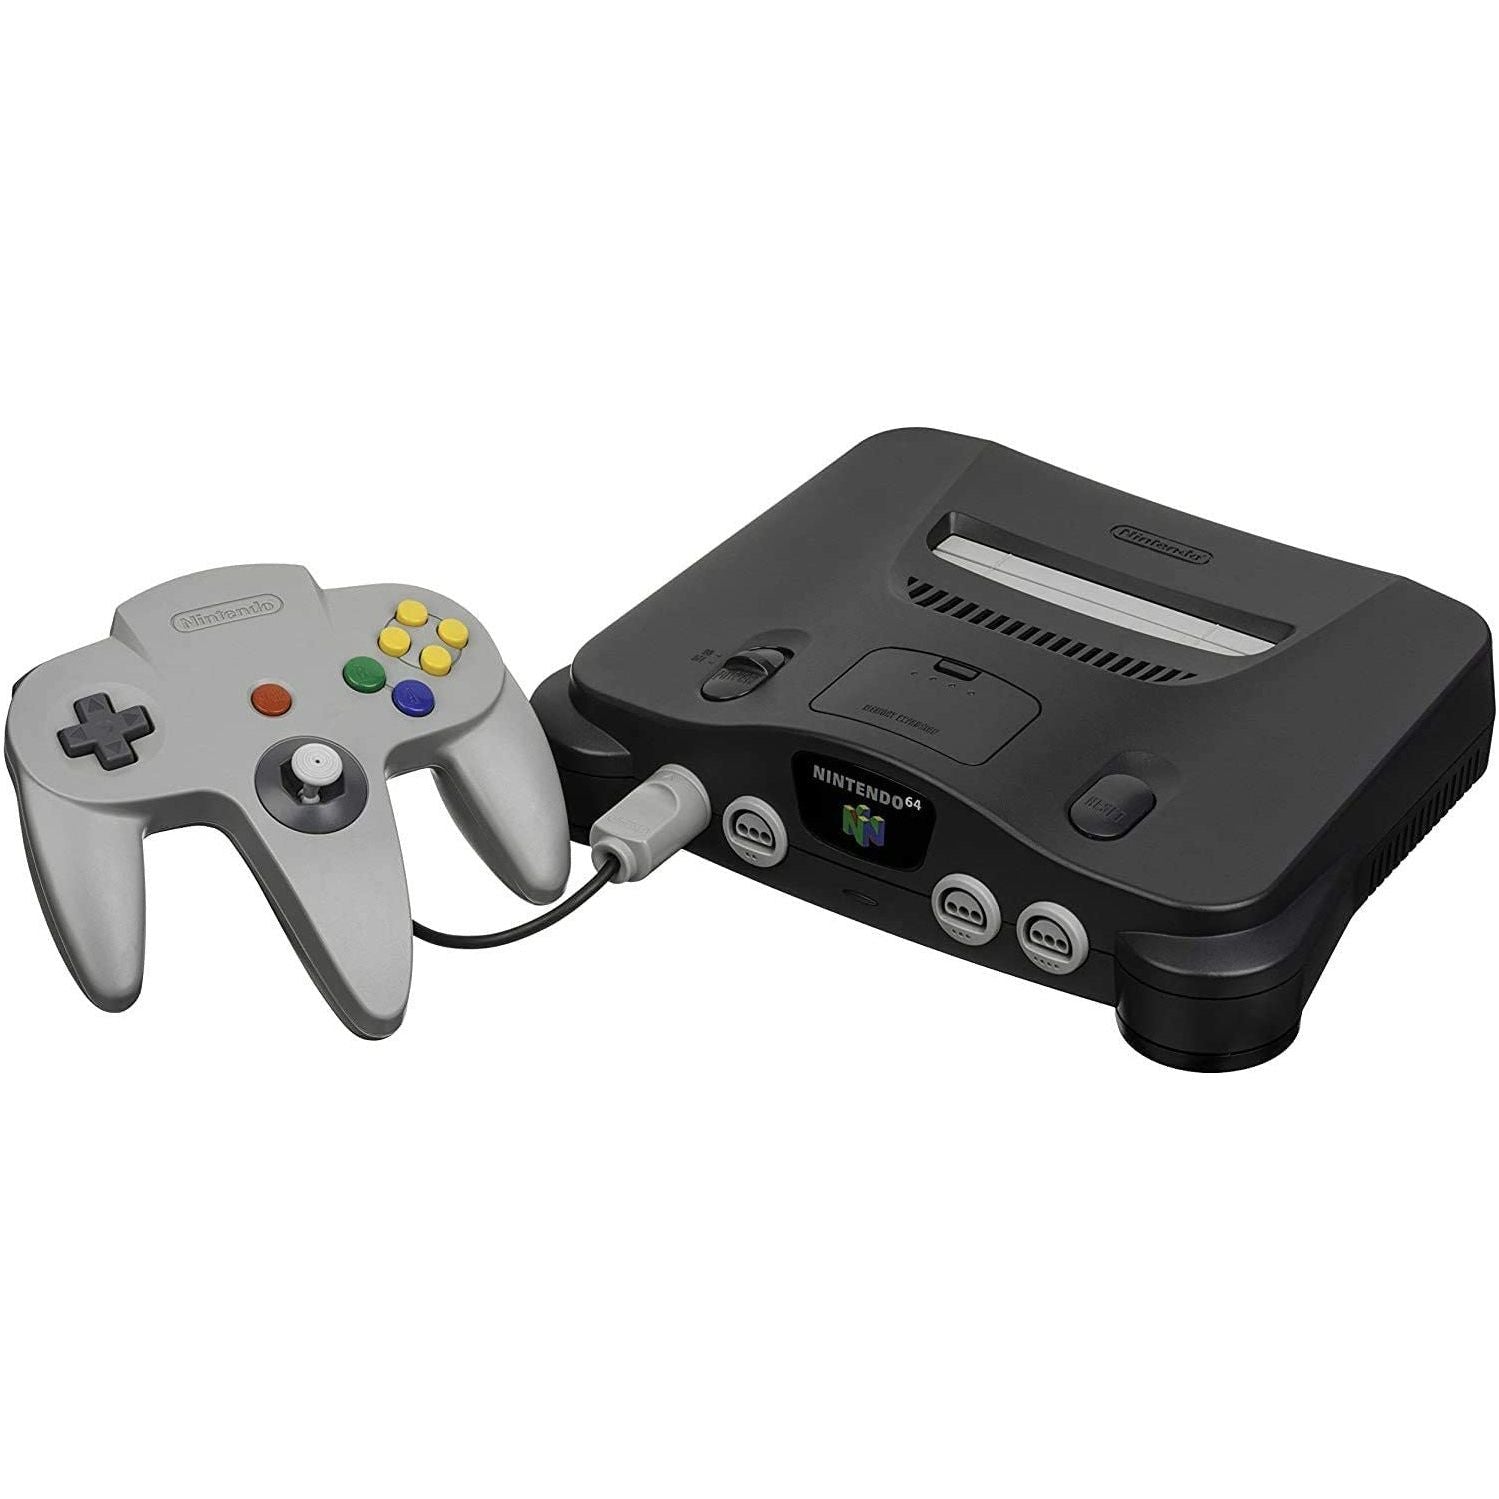 Nintendo 64 System (Grey)